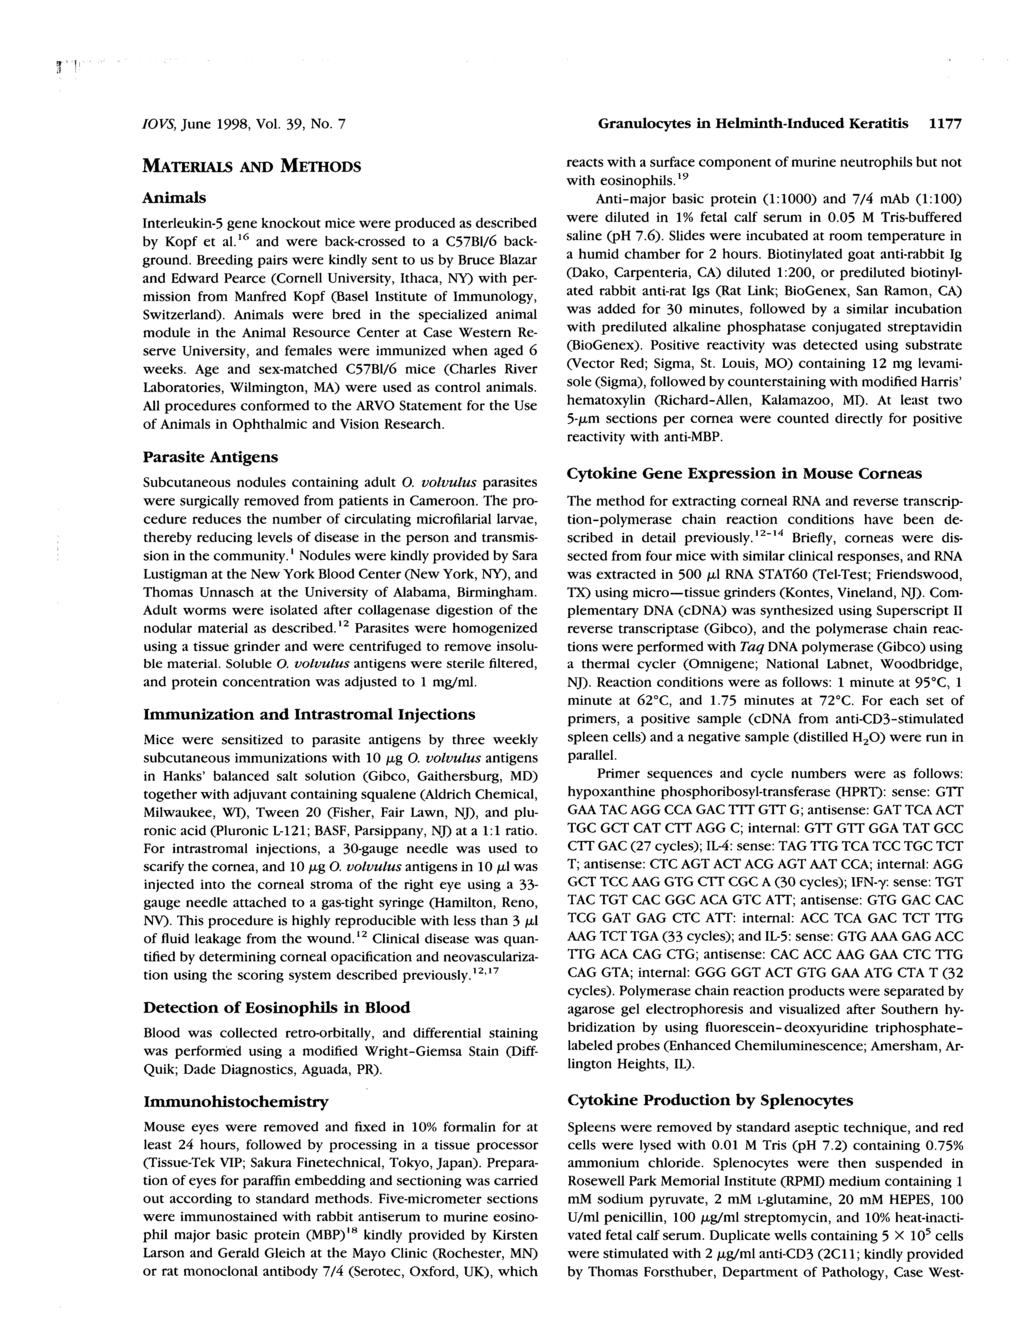 IOVS, June 1998, Vol. 39, No. 7 Granulocytes in Helminth-Induced Keratitis 1177 MATERIALS AND METHODS Animals Interleukin-5 gene knockout mice were produced as described by Kopf et al.